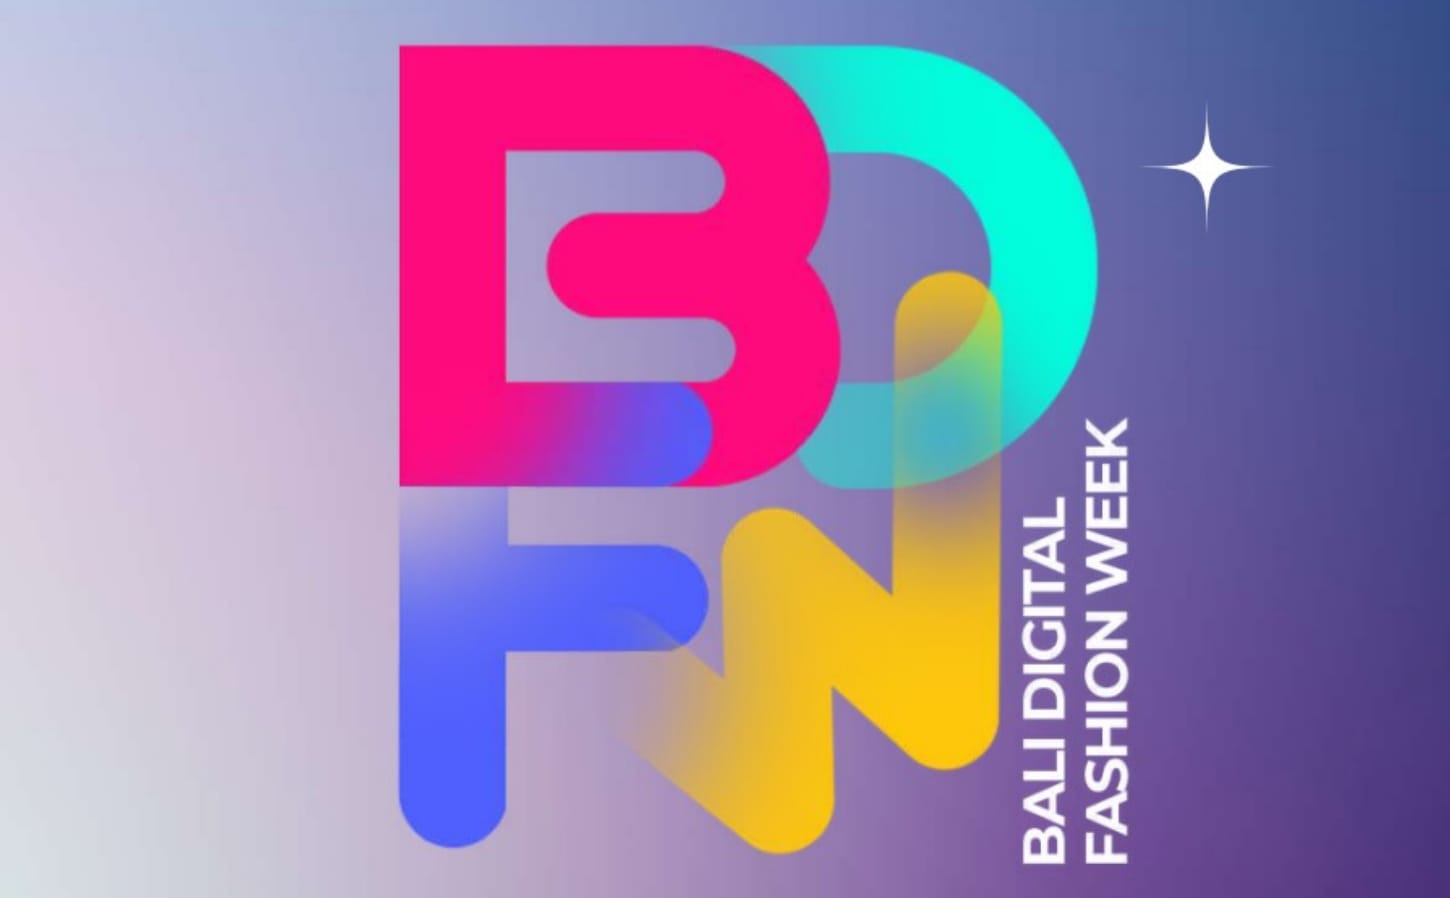 BDFW 2022 Kolaborasi dengan Seniman Lokal hingga Internasional, Hadirkan AR Fashion Exhibition